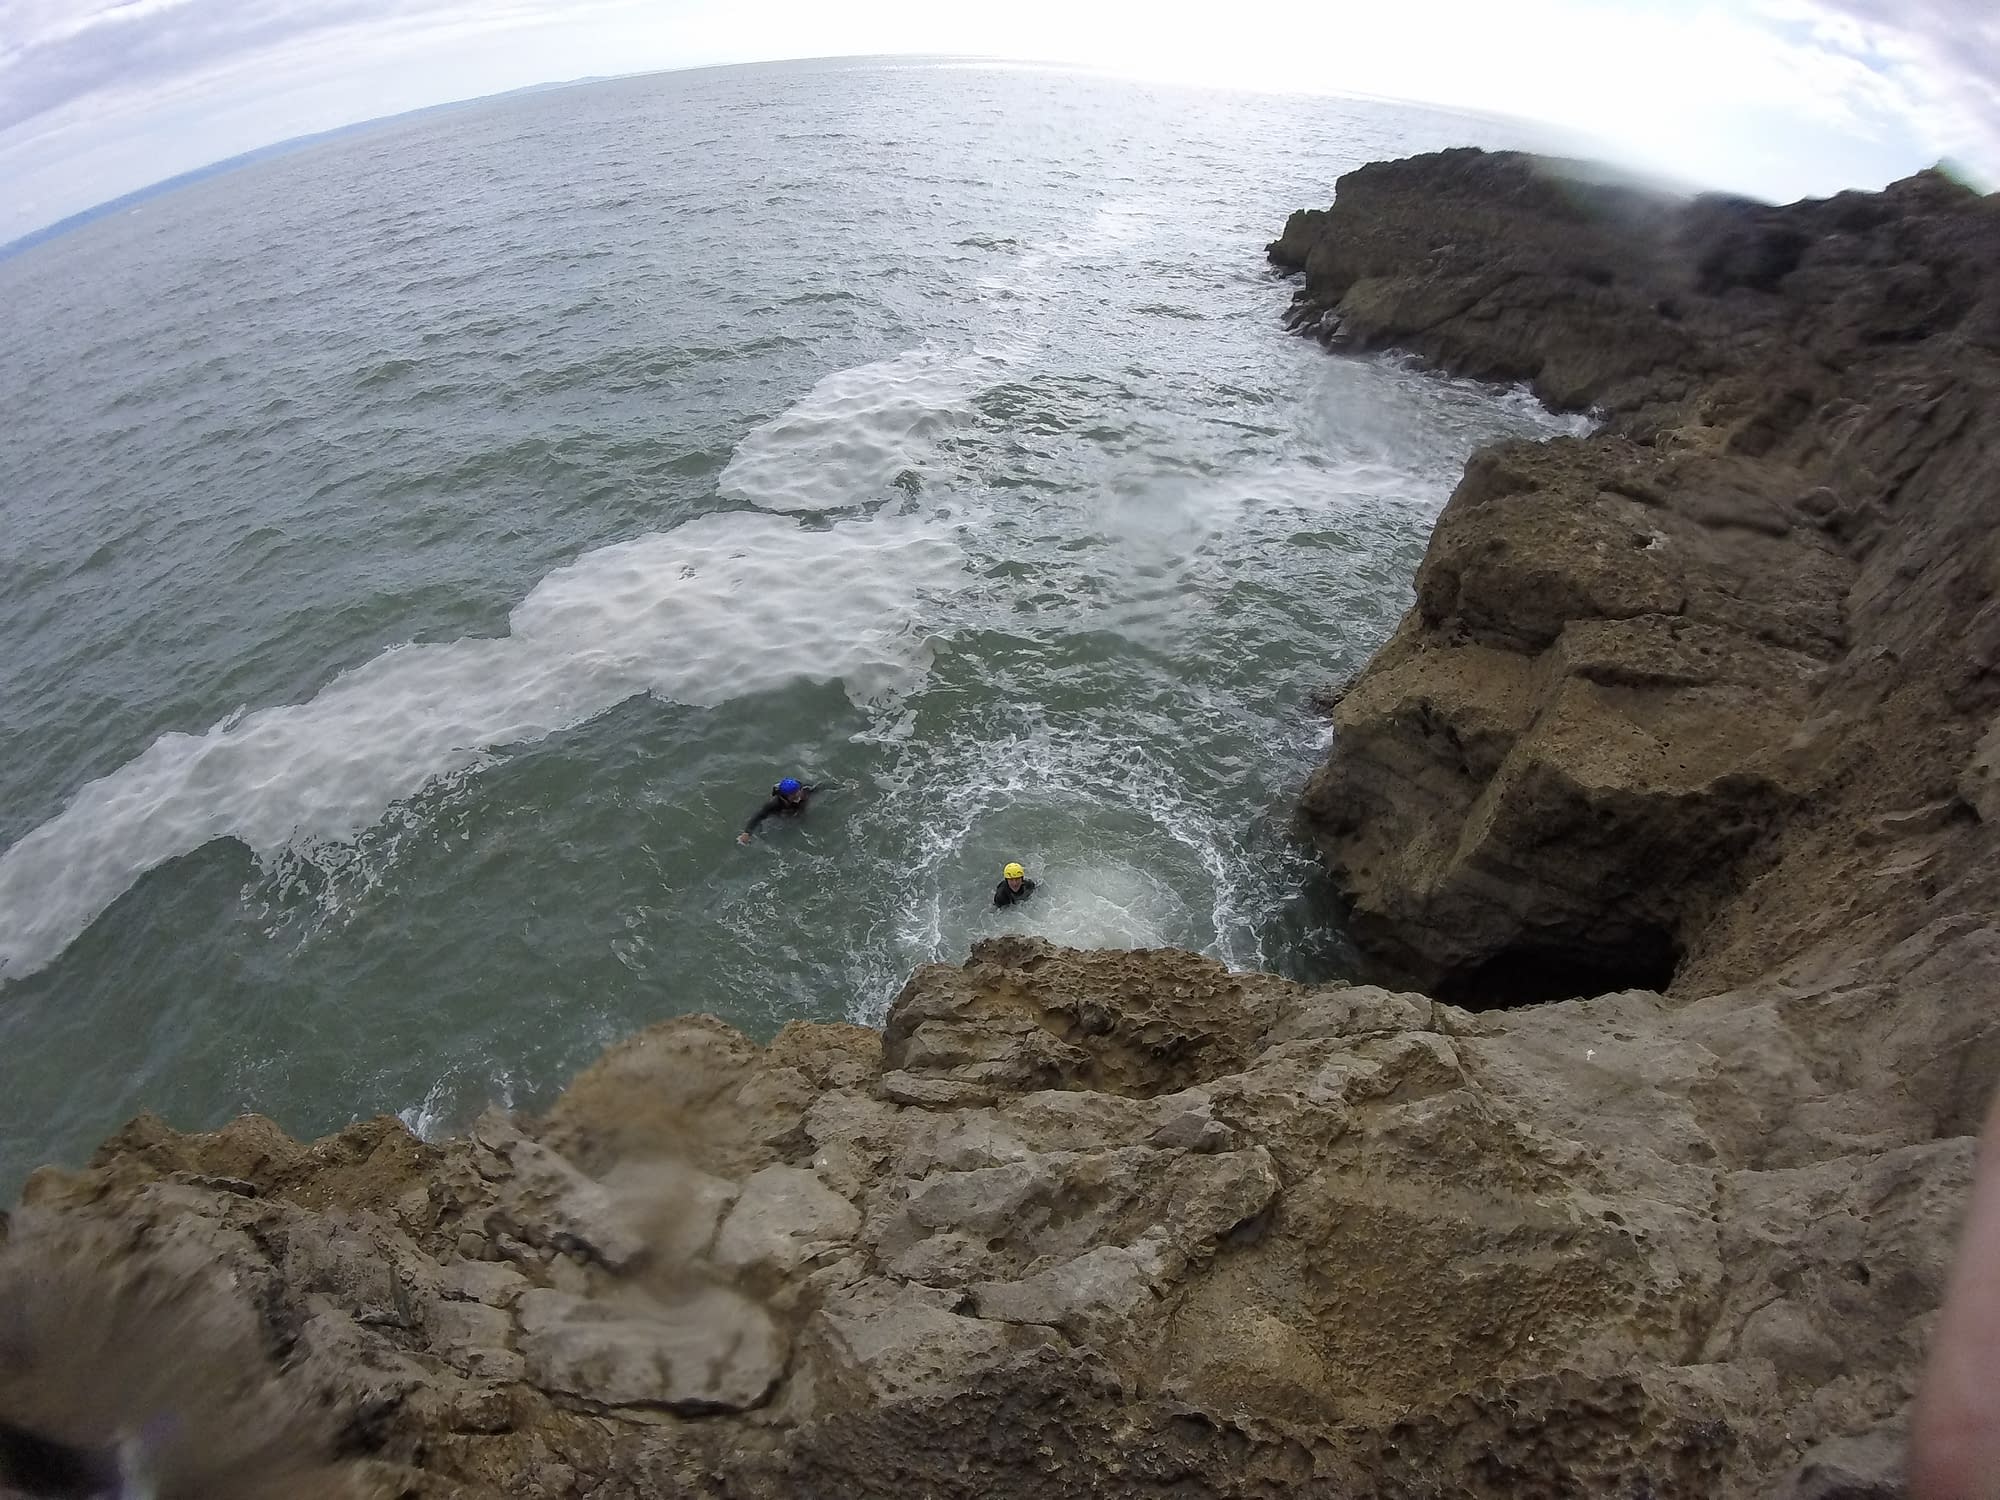 People swimming in sea after big coasteering jump